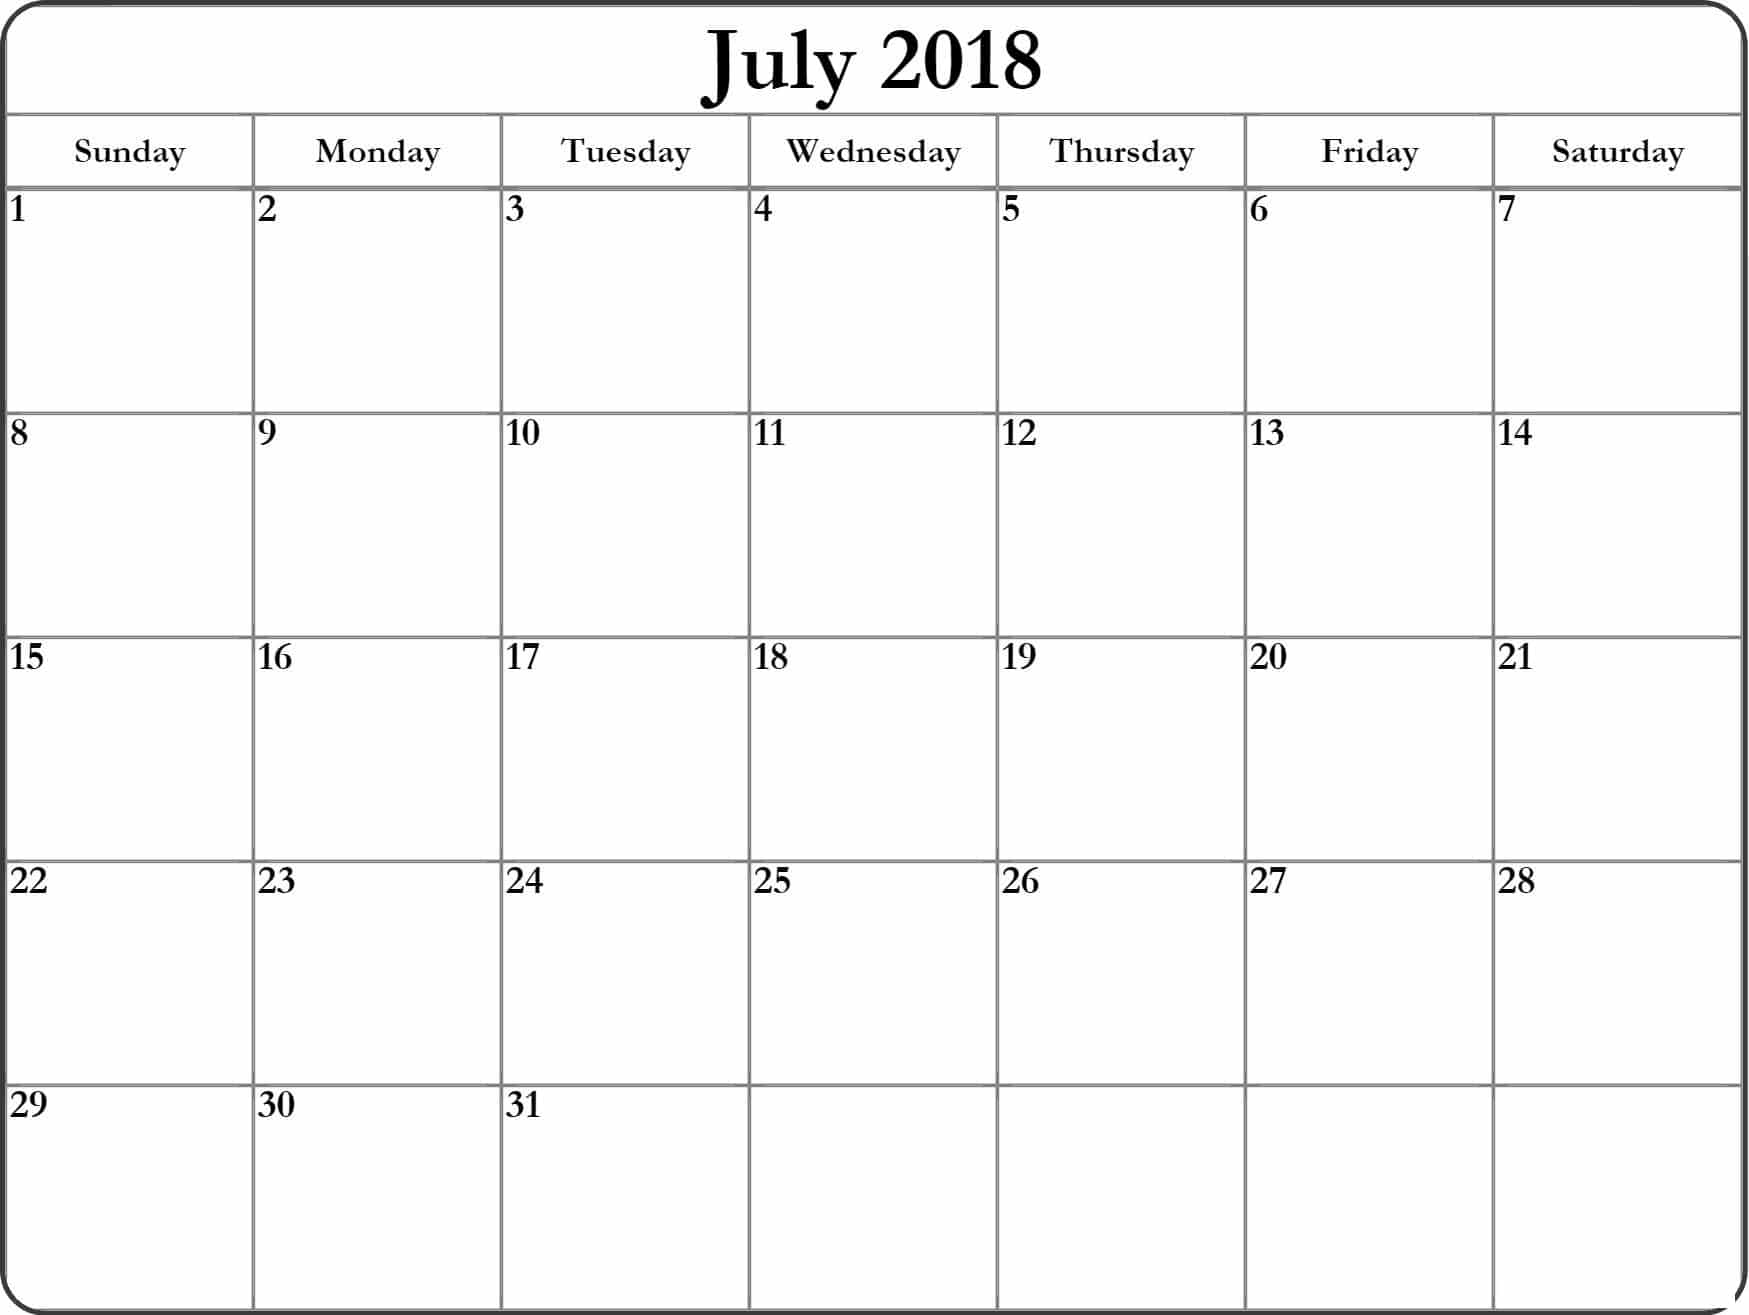  July Calendar 2018